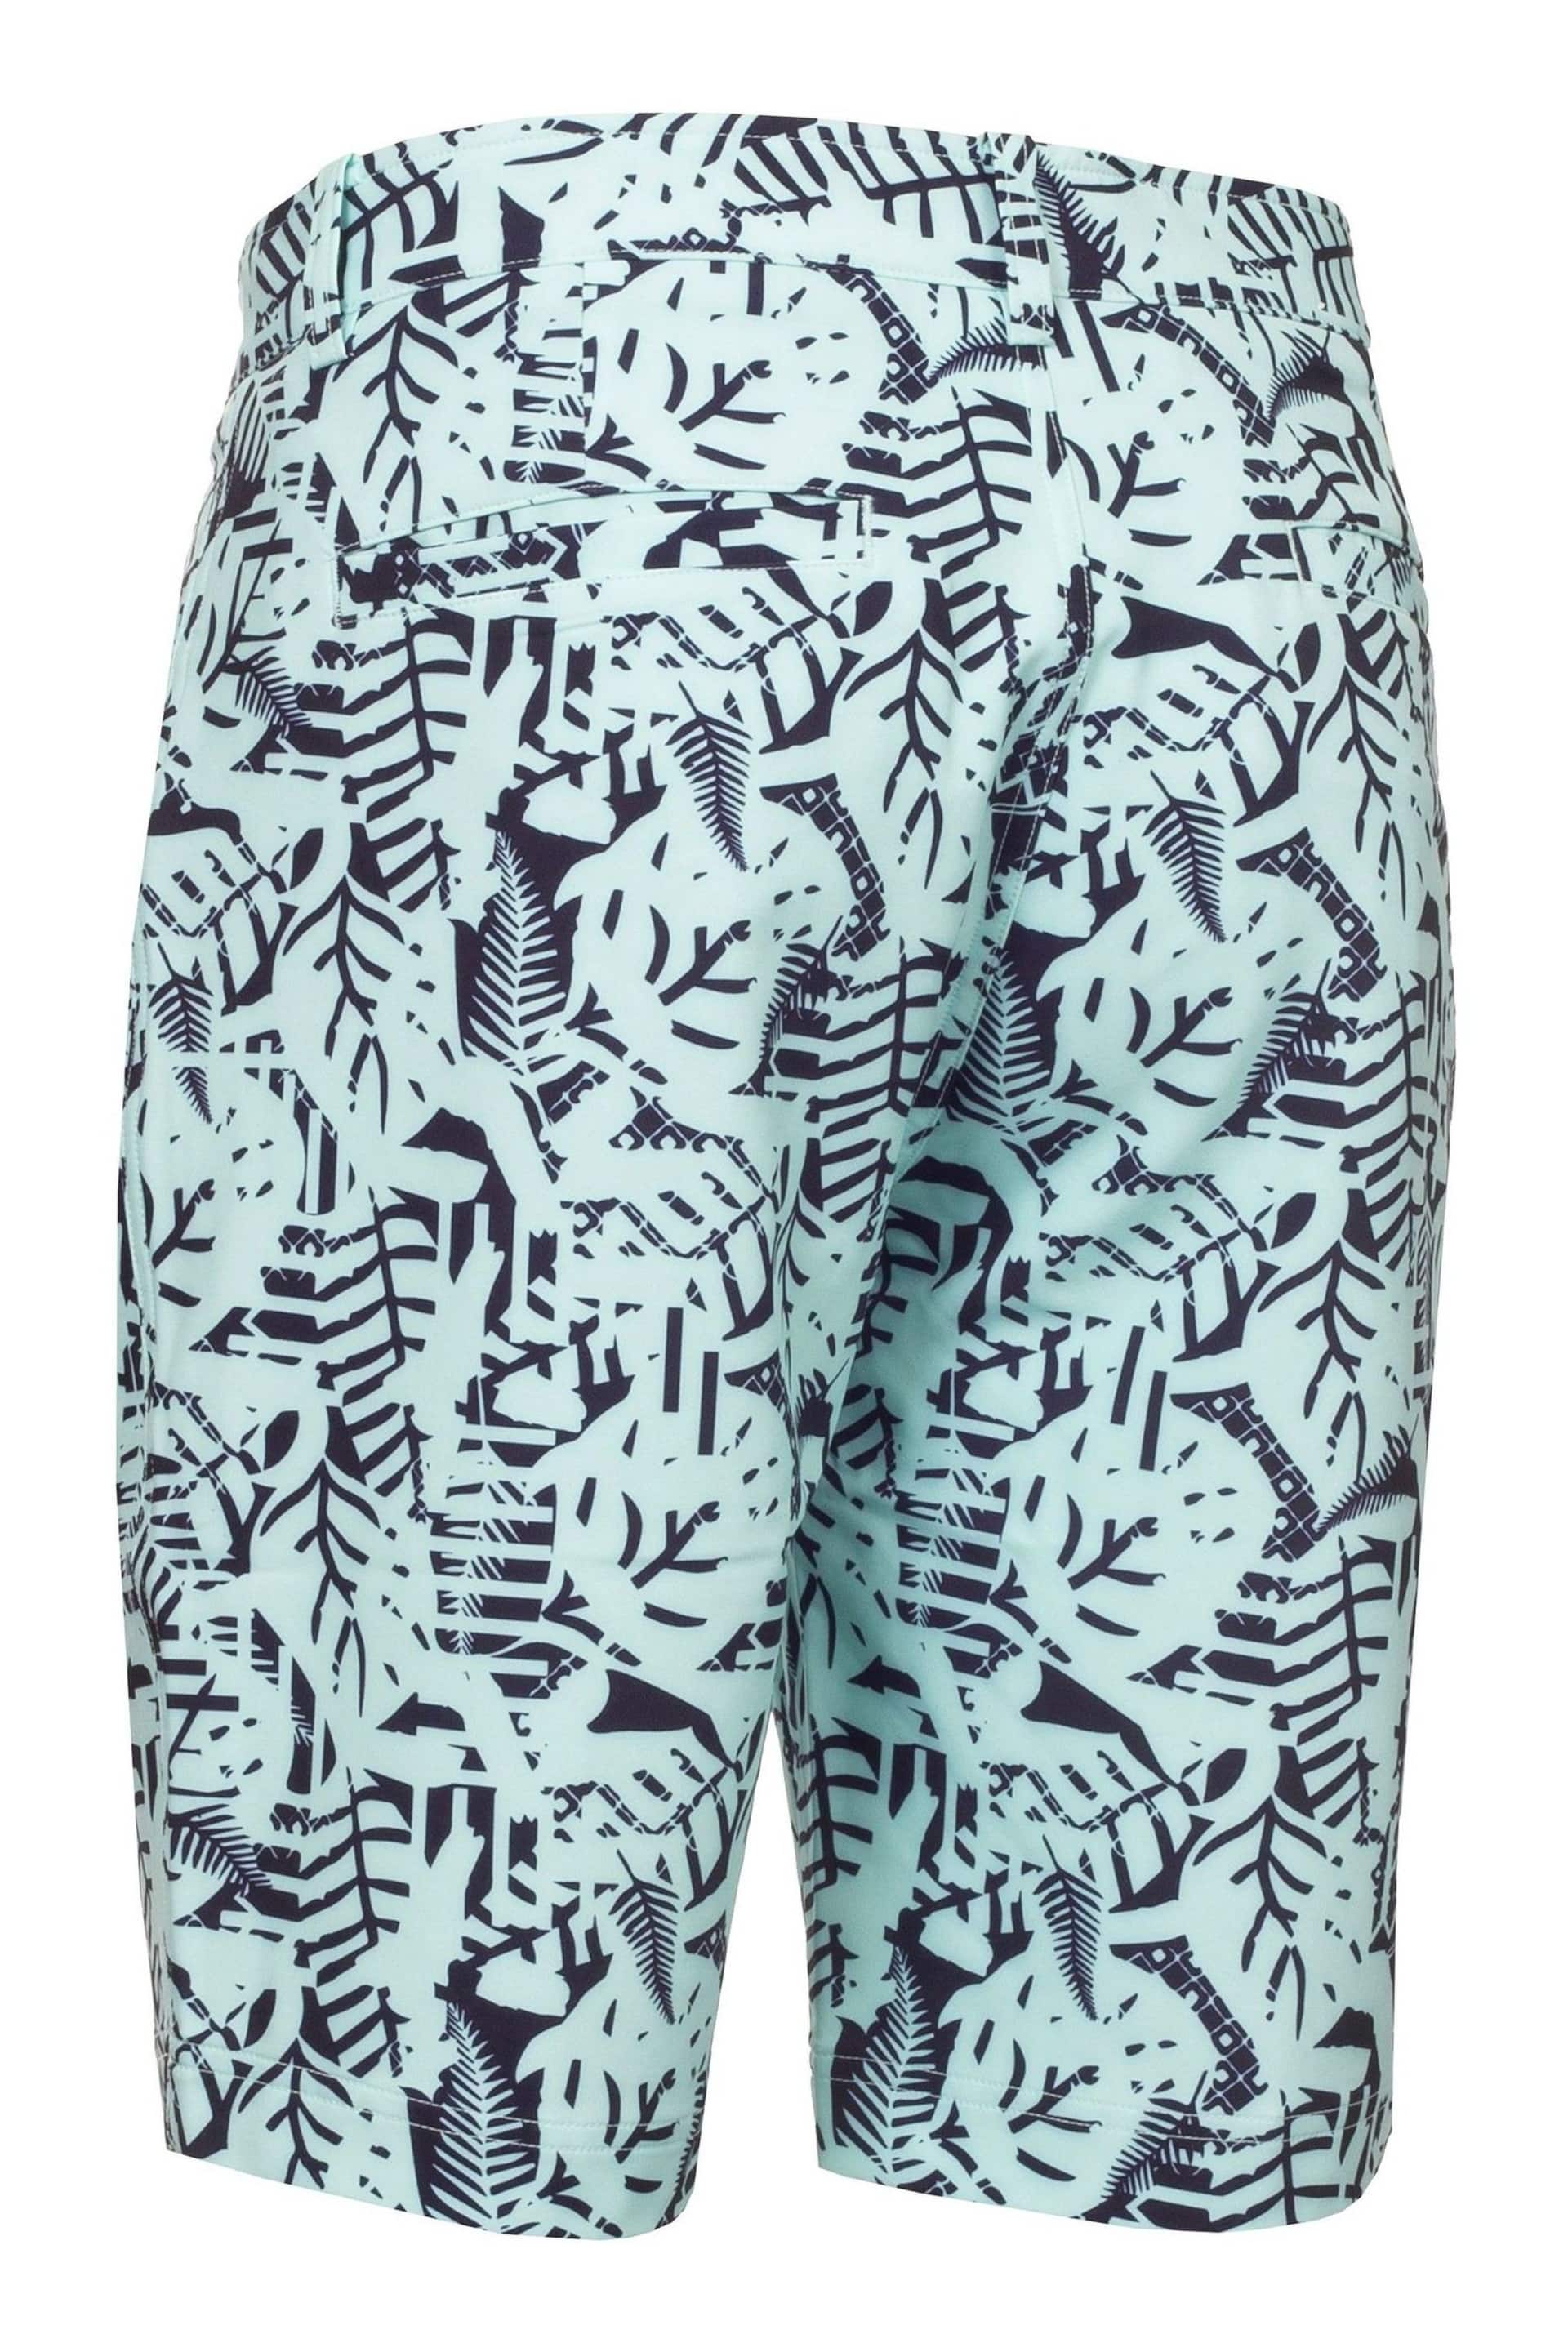 Calvin Klein Golf Blue Printed Genius Shorts - Image 6 of 10